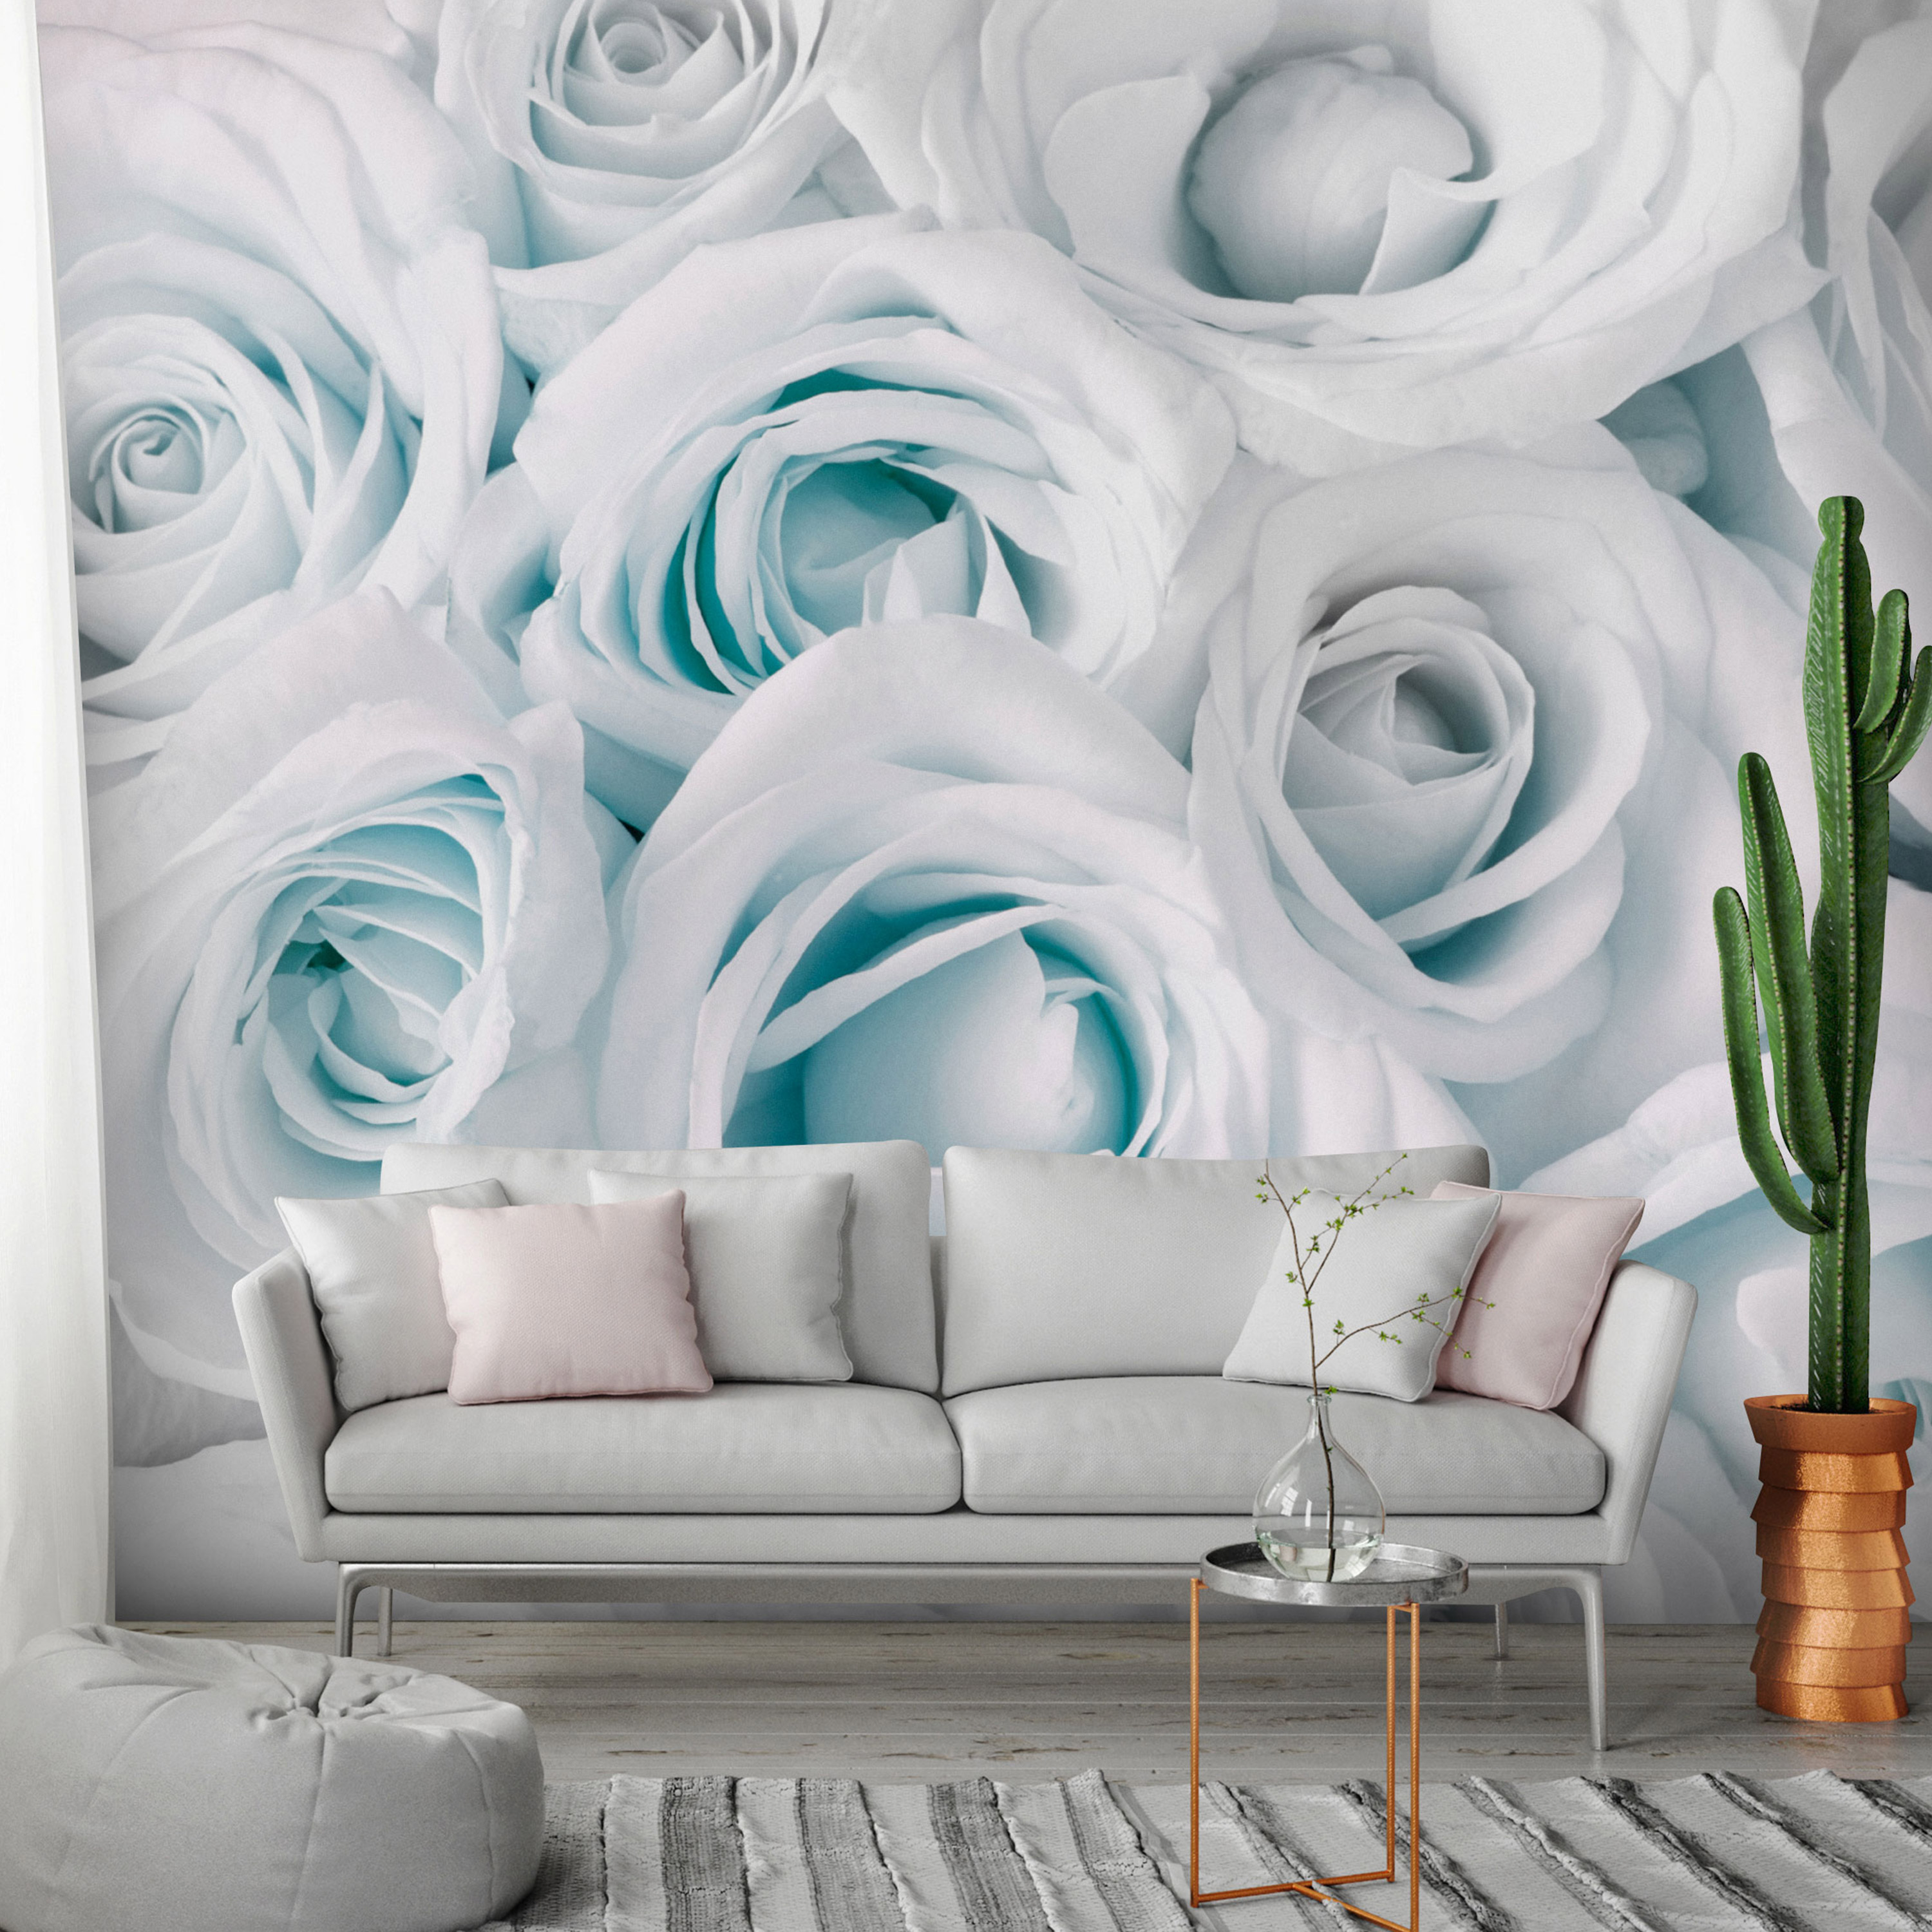 Self-adhesive Wallpaper - Satin Rose (Turquoise) - 294x210